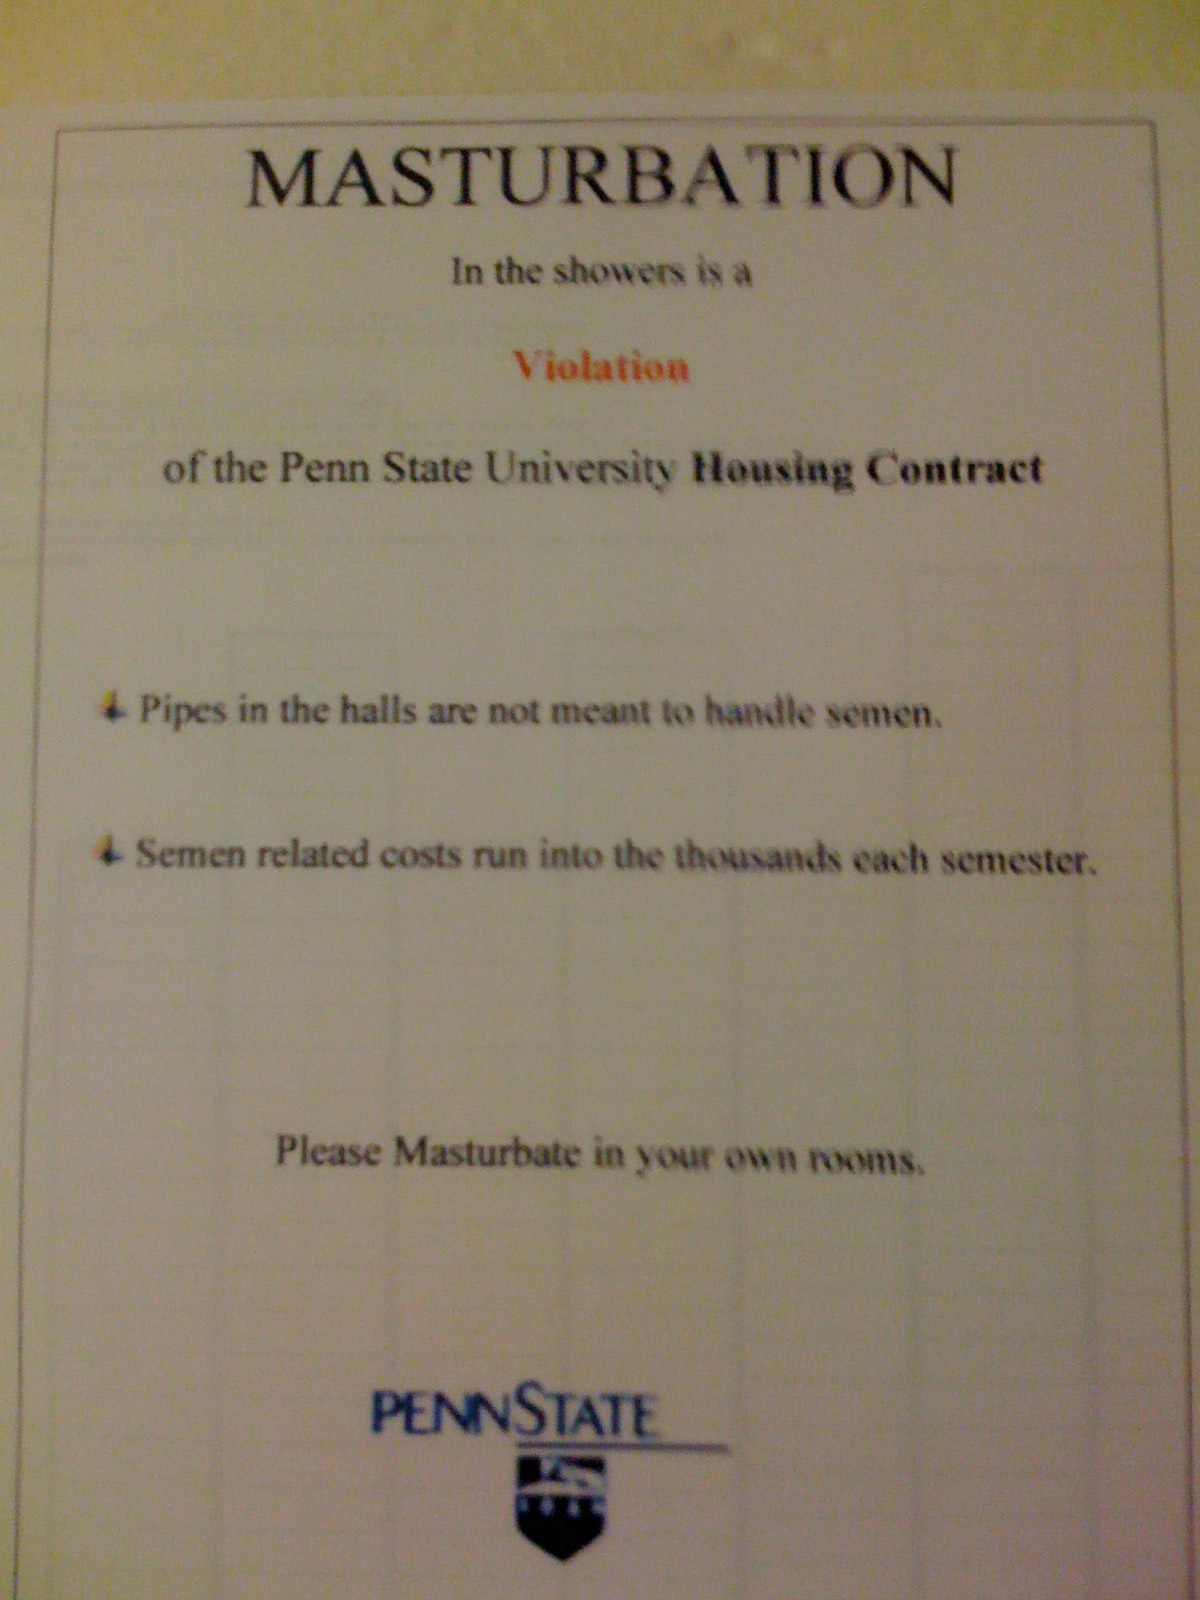 atleast at Penn State.....